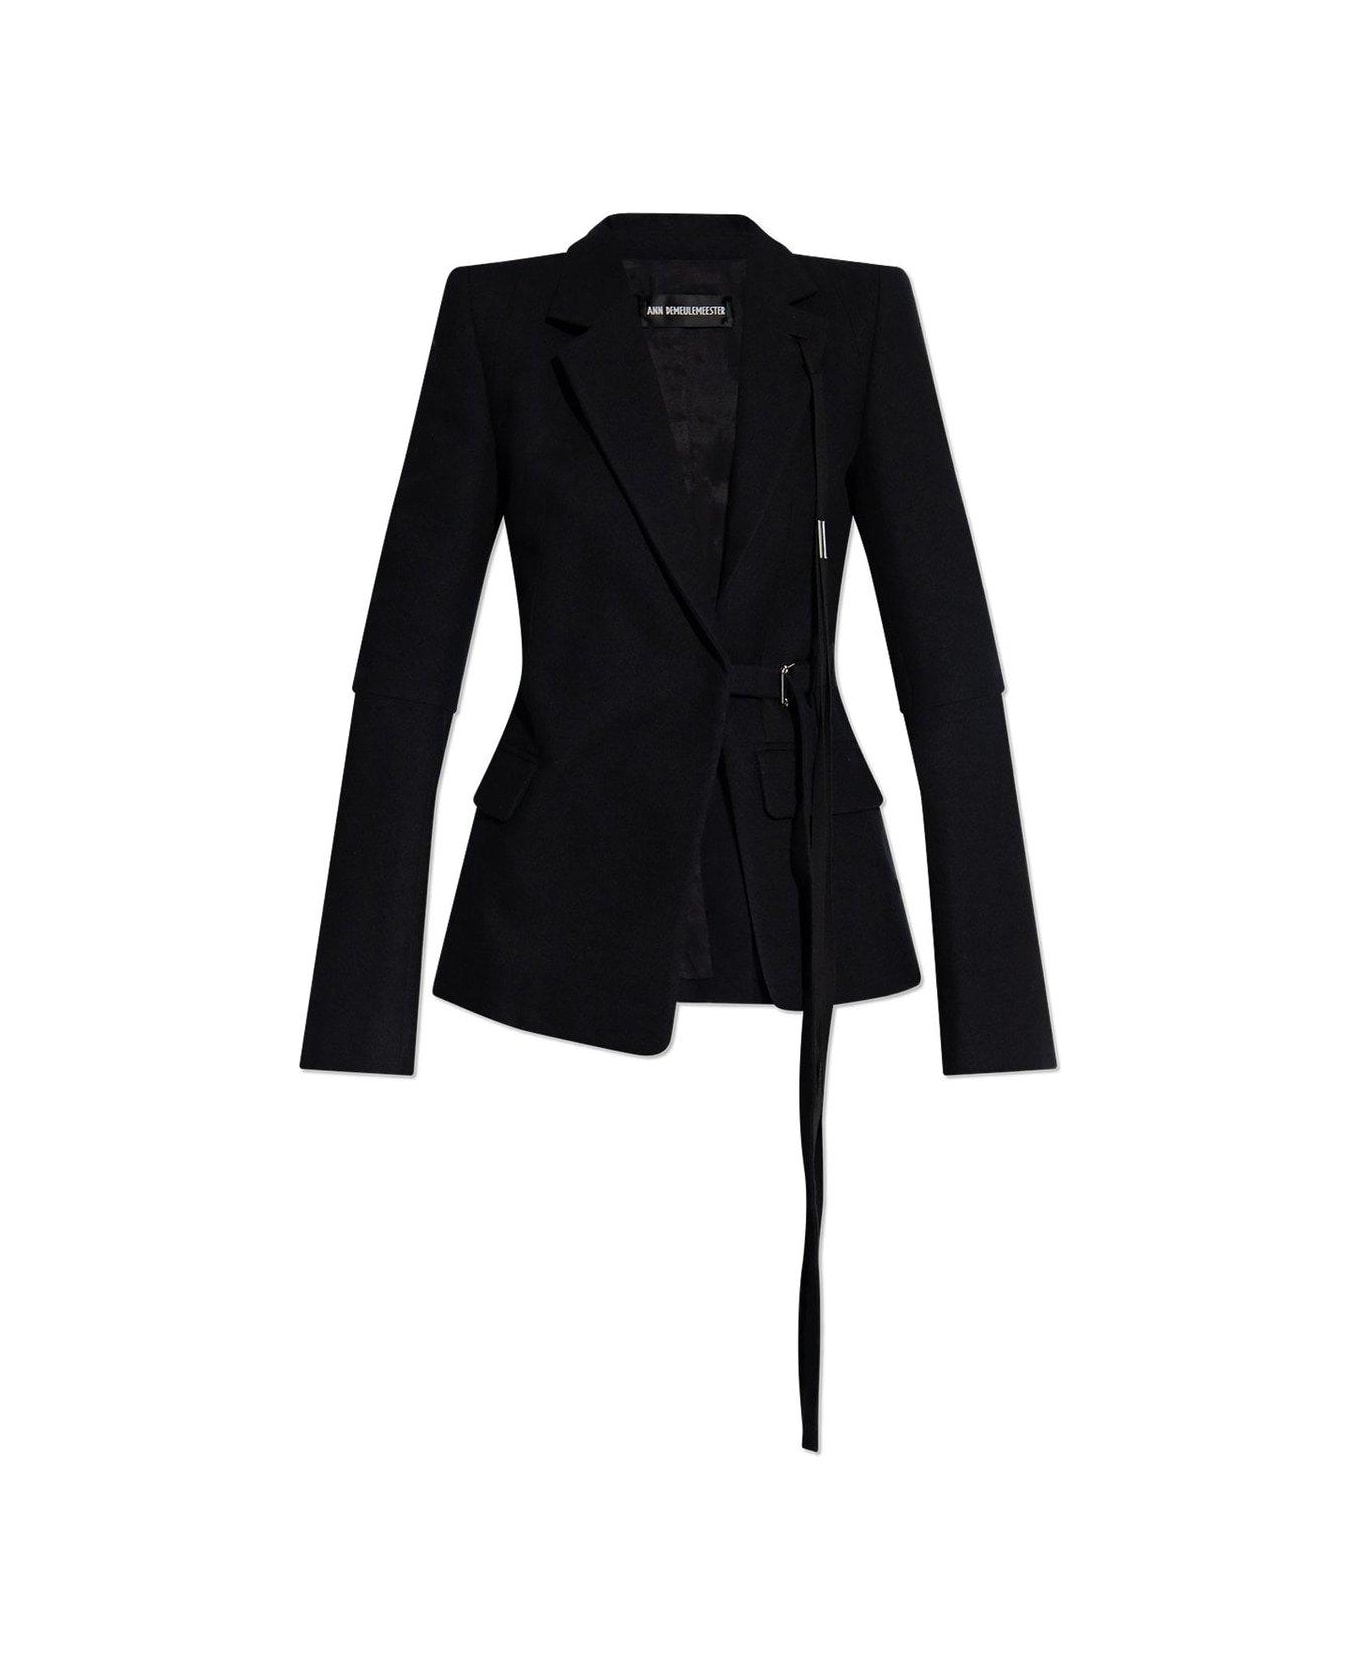 Ann Demeulemeester Venla Asymmetric Tailored Jacket - BLACK